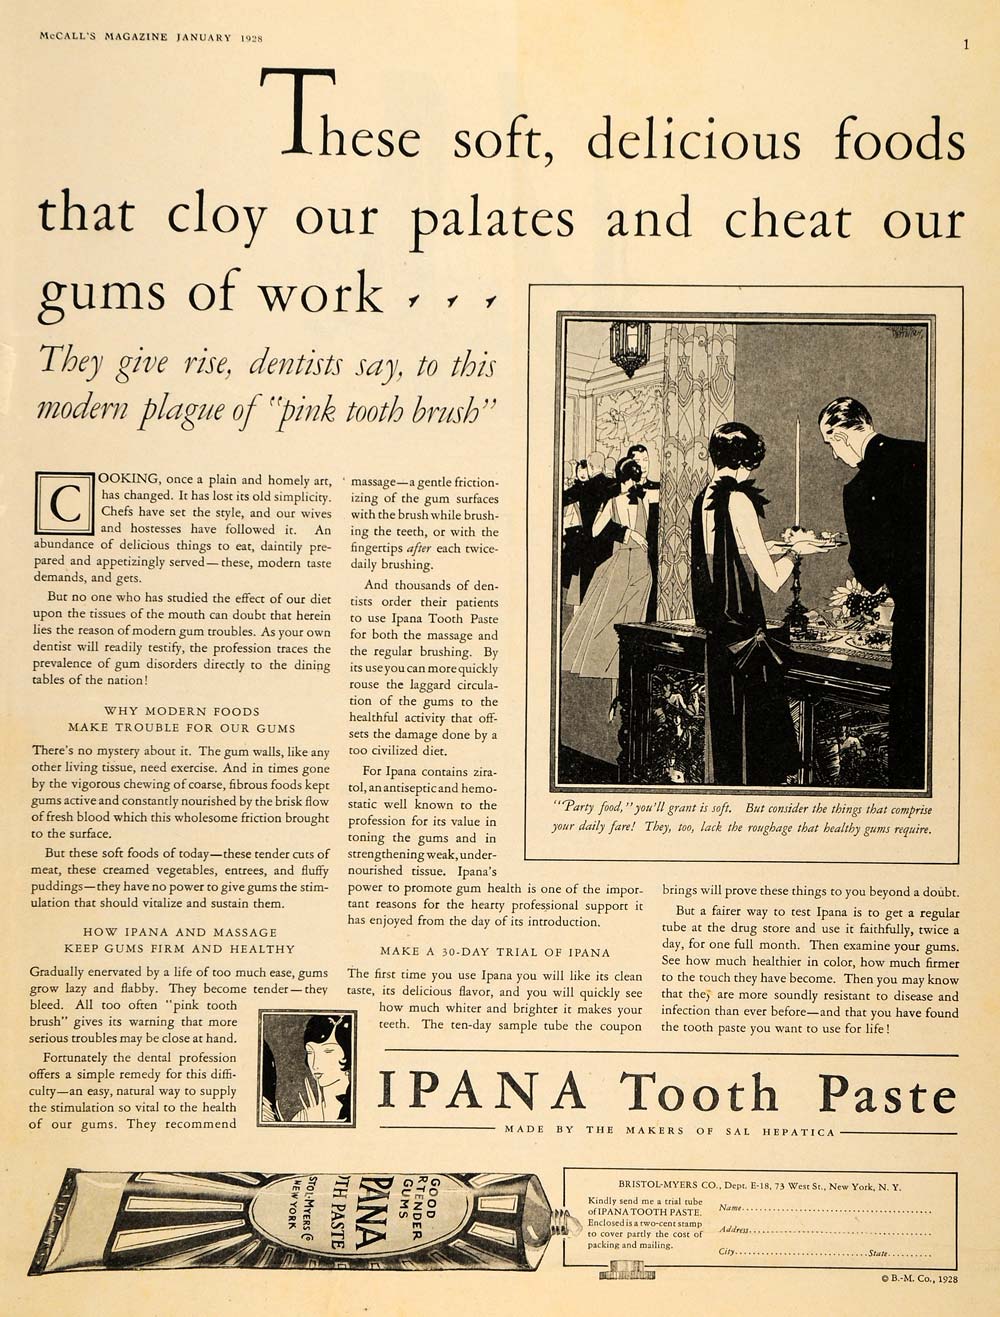 1928 Ad Bristol-Myers Co Ipana Tooth Paste Dental Care - ORIGINAL MCC2